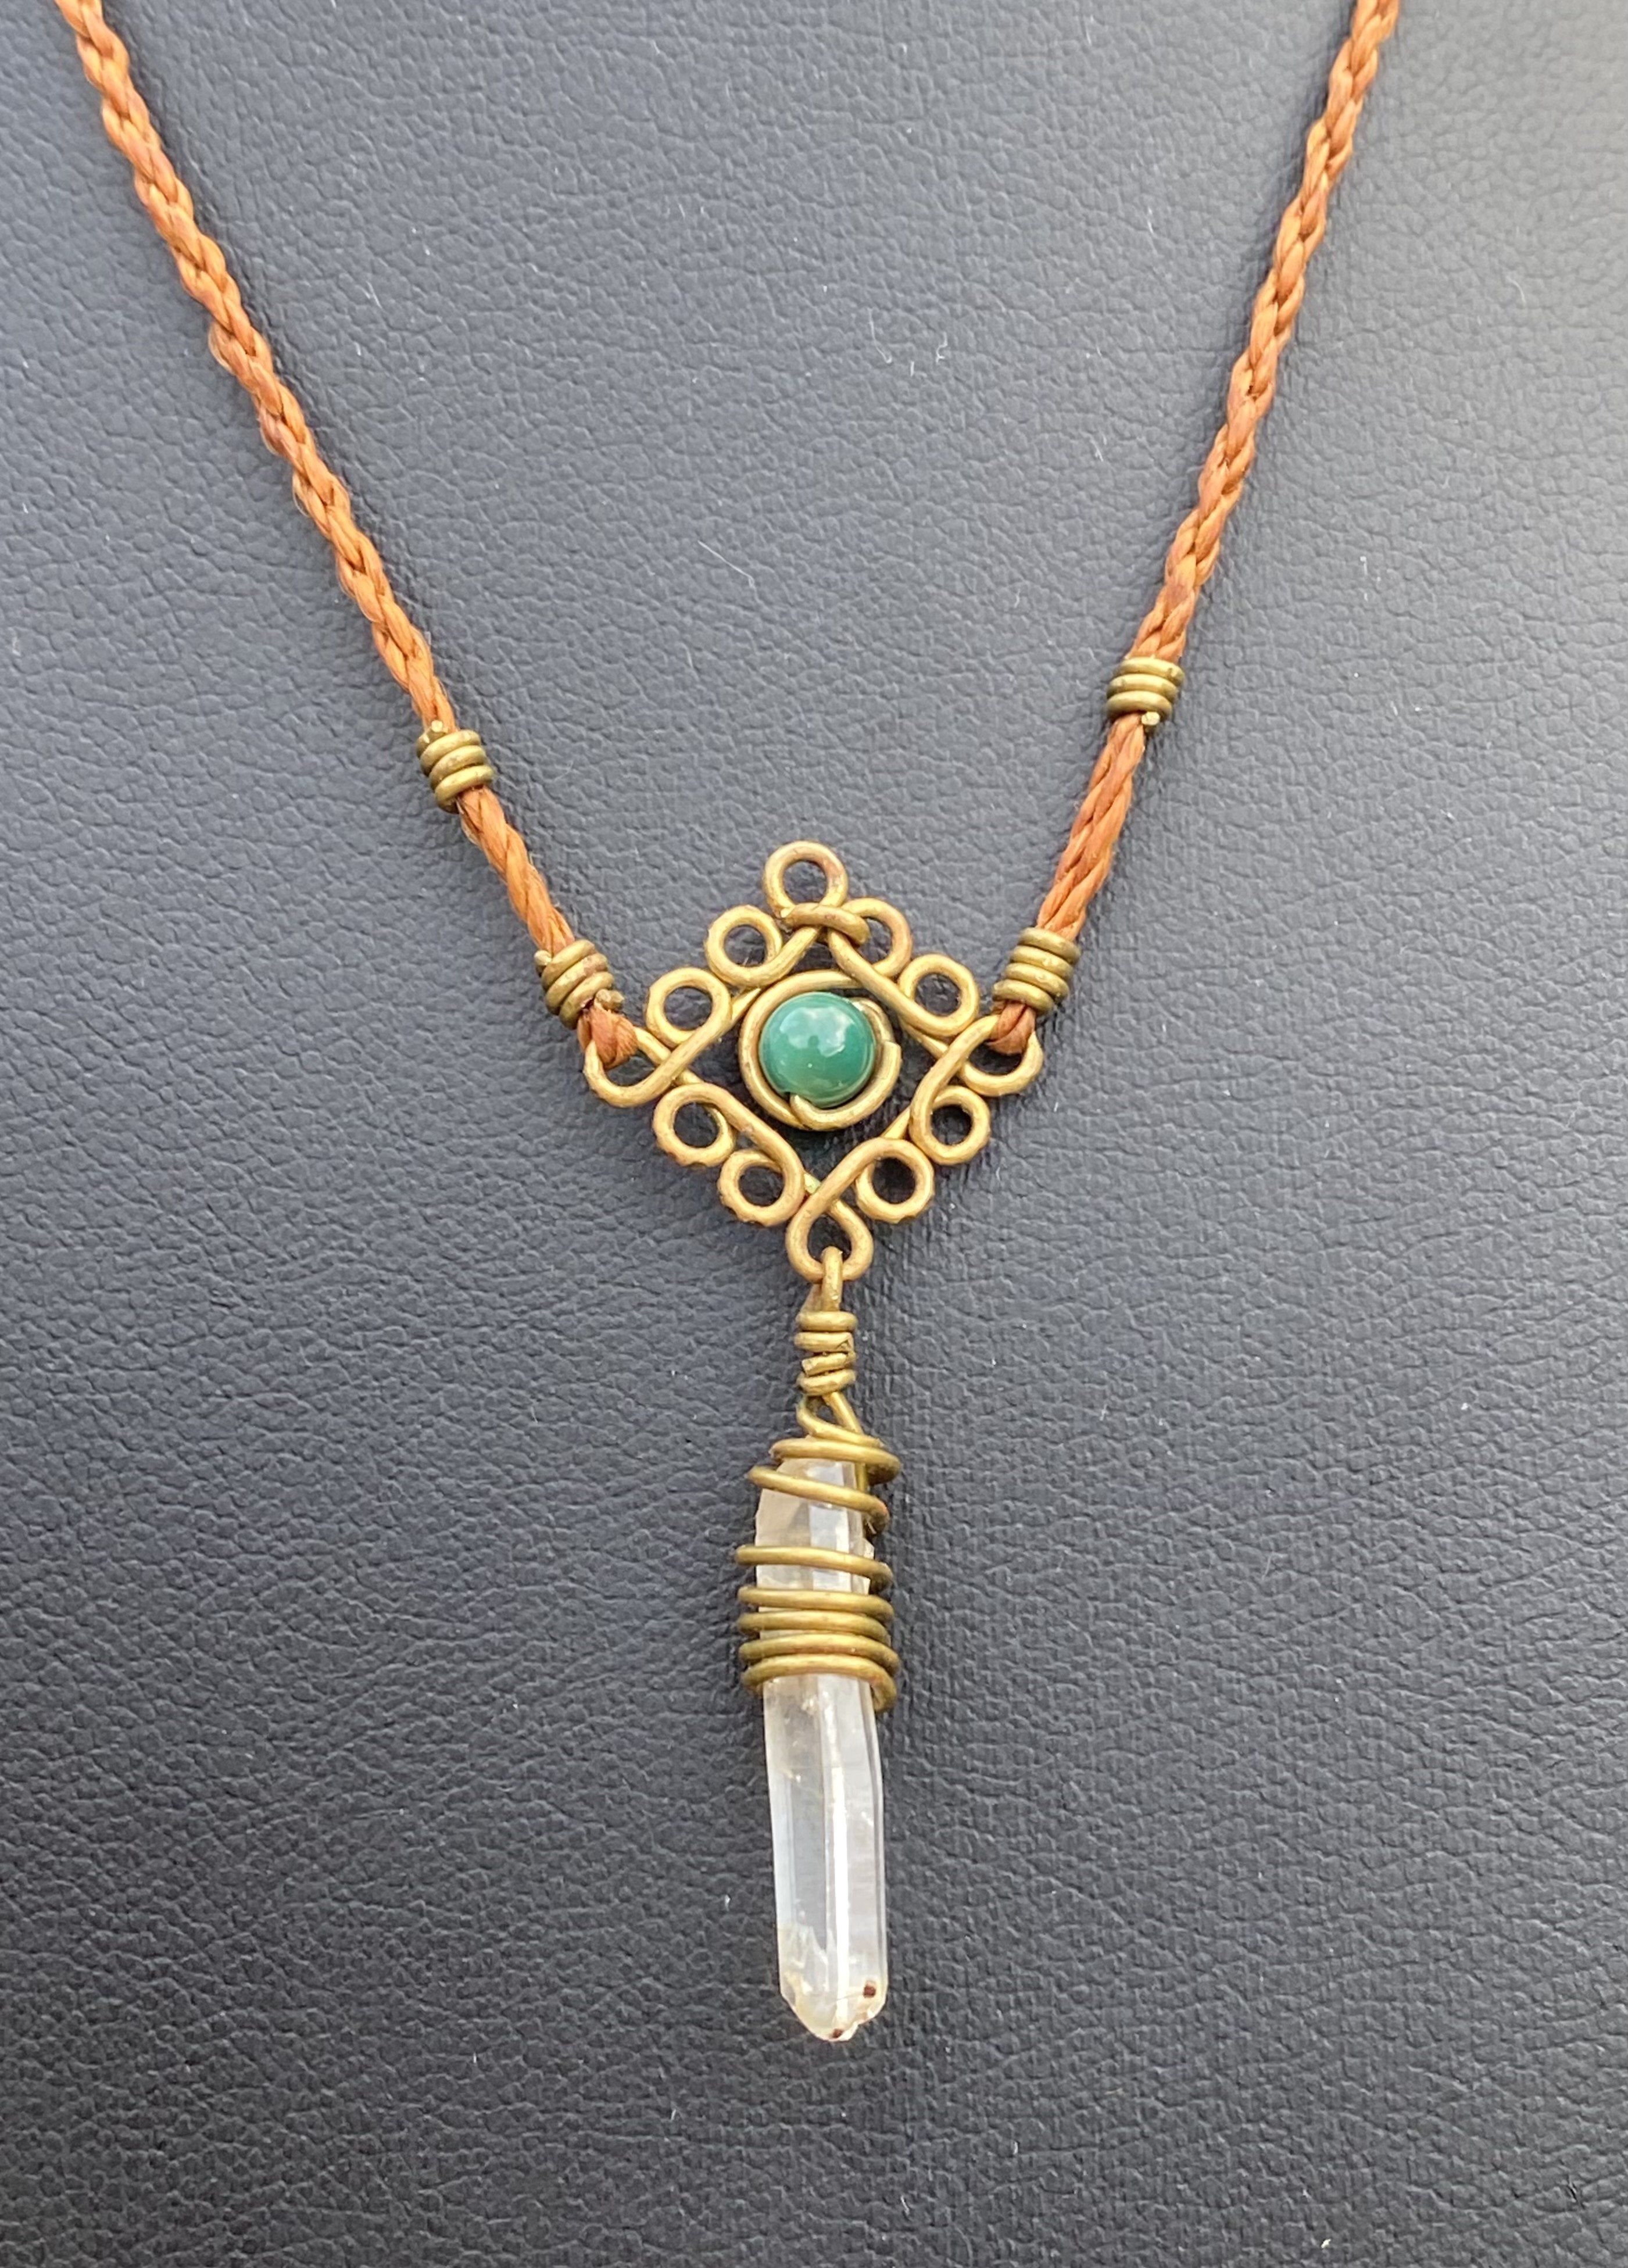 Mandala Necklace - Caramel And Crystal Quartz